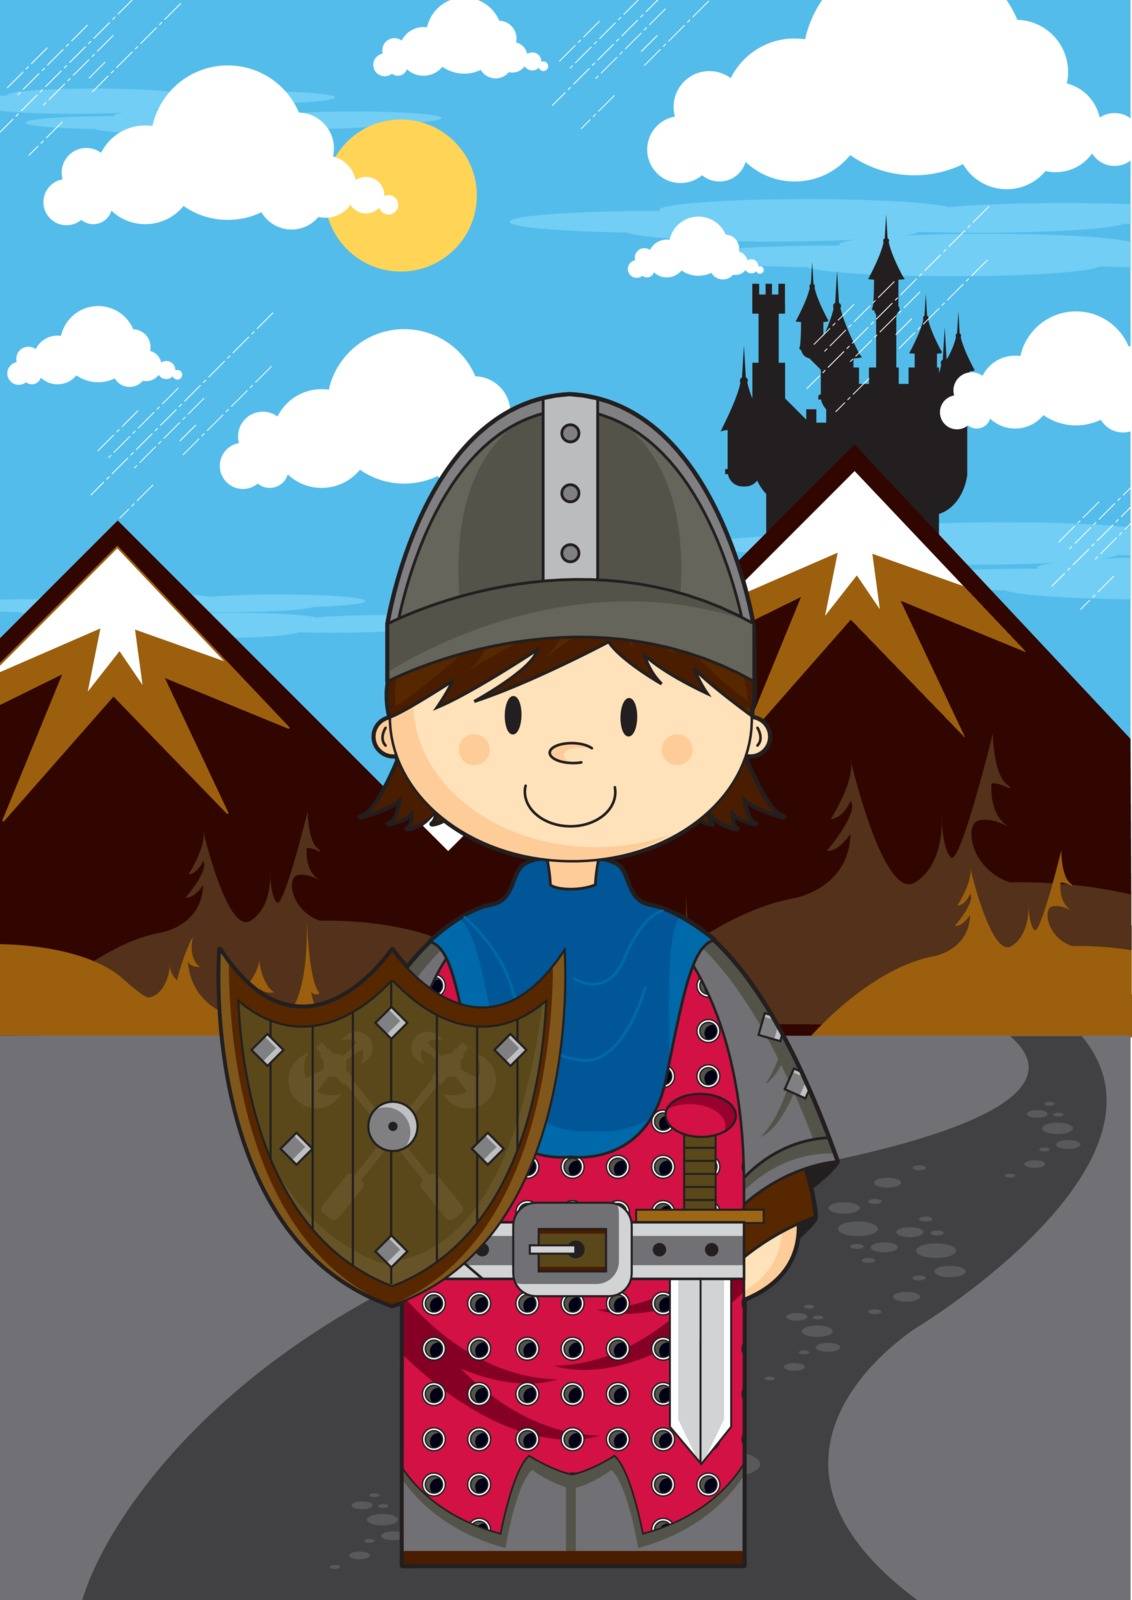 Cute Cartoon Medieval Soldier by markmurphycreative